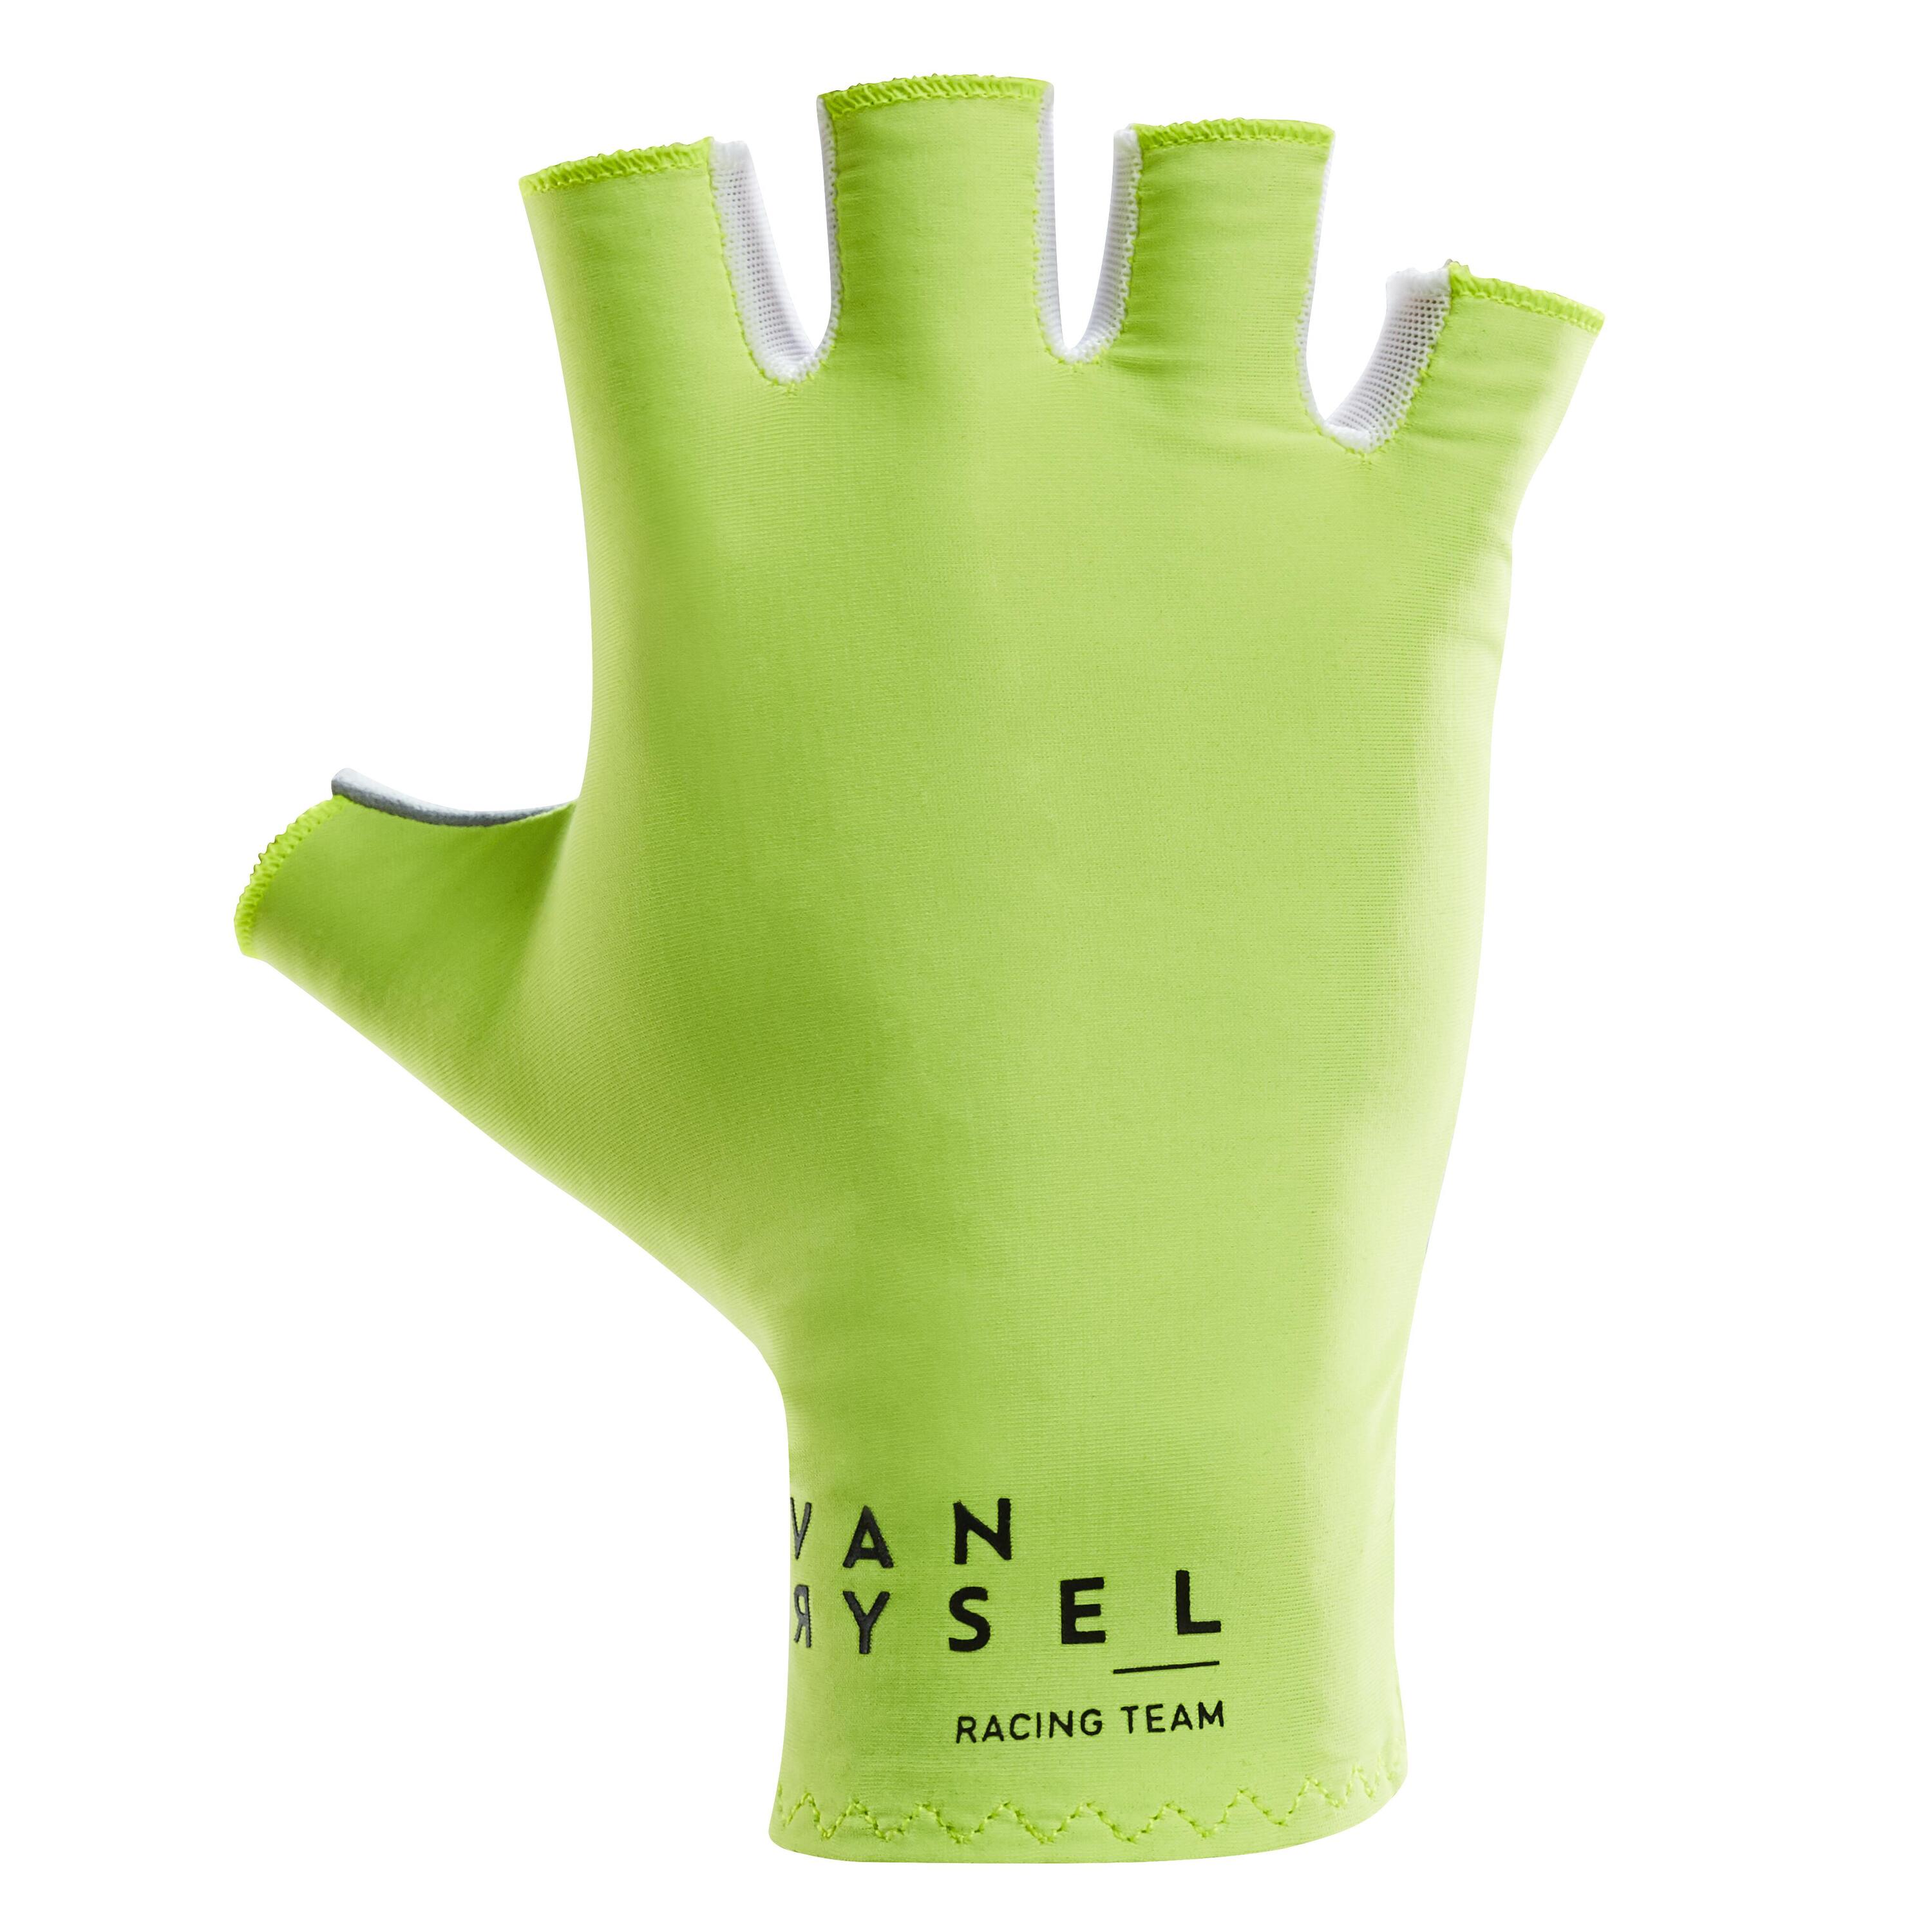 VAN RYSEL Road Cycling Gloves 900 Race - Neon Yellow